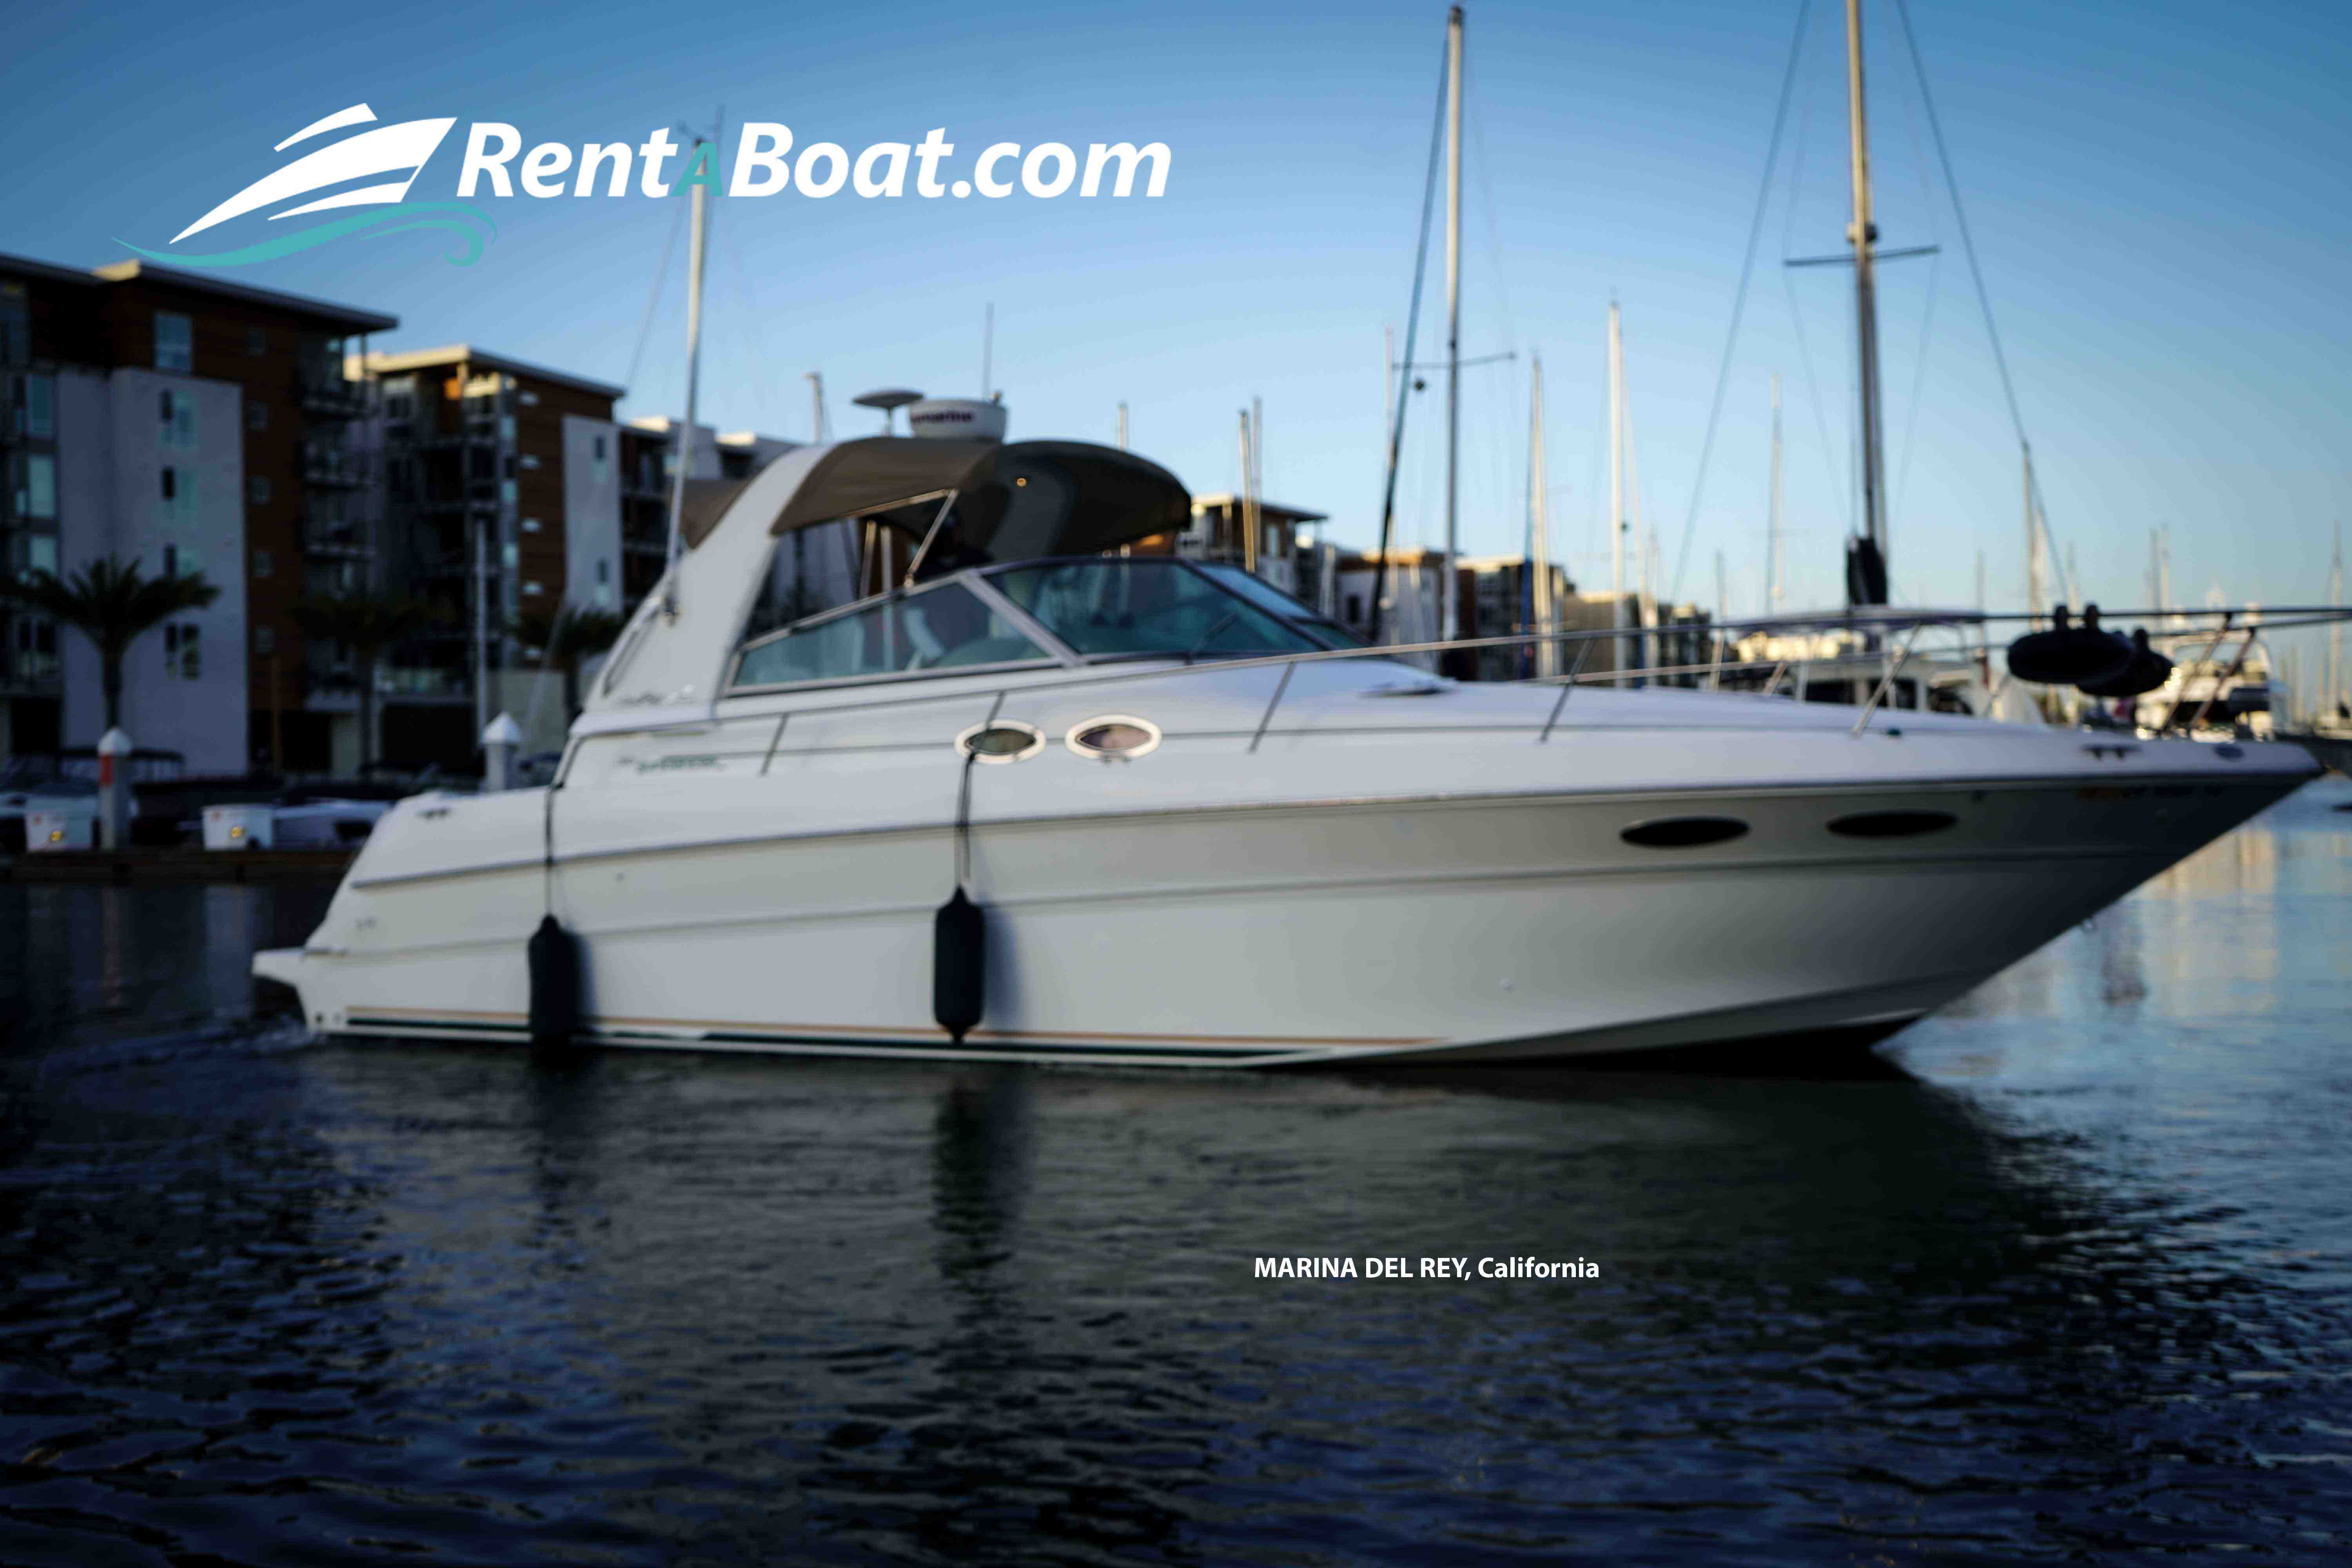  boat rentals California MARINA DEL REY California  Sea Ray 310 Sundancer 2000 33.4 